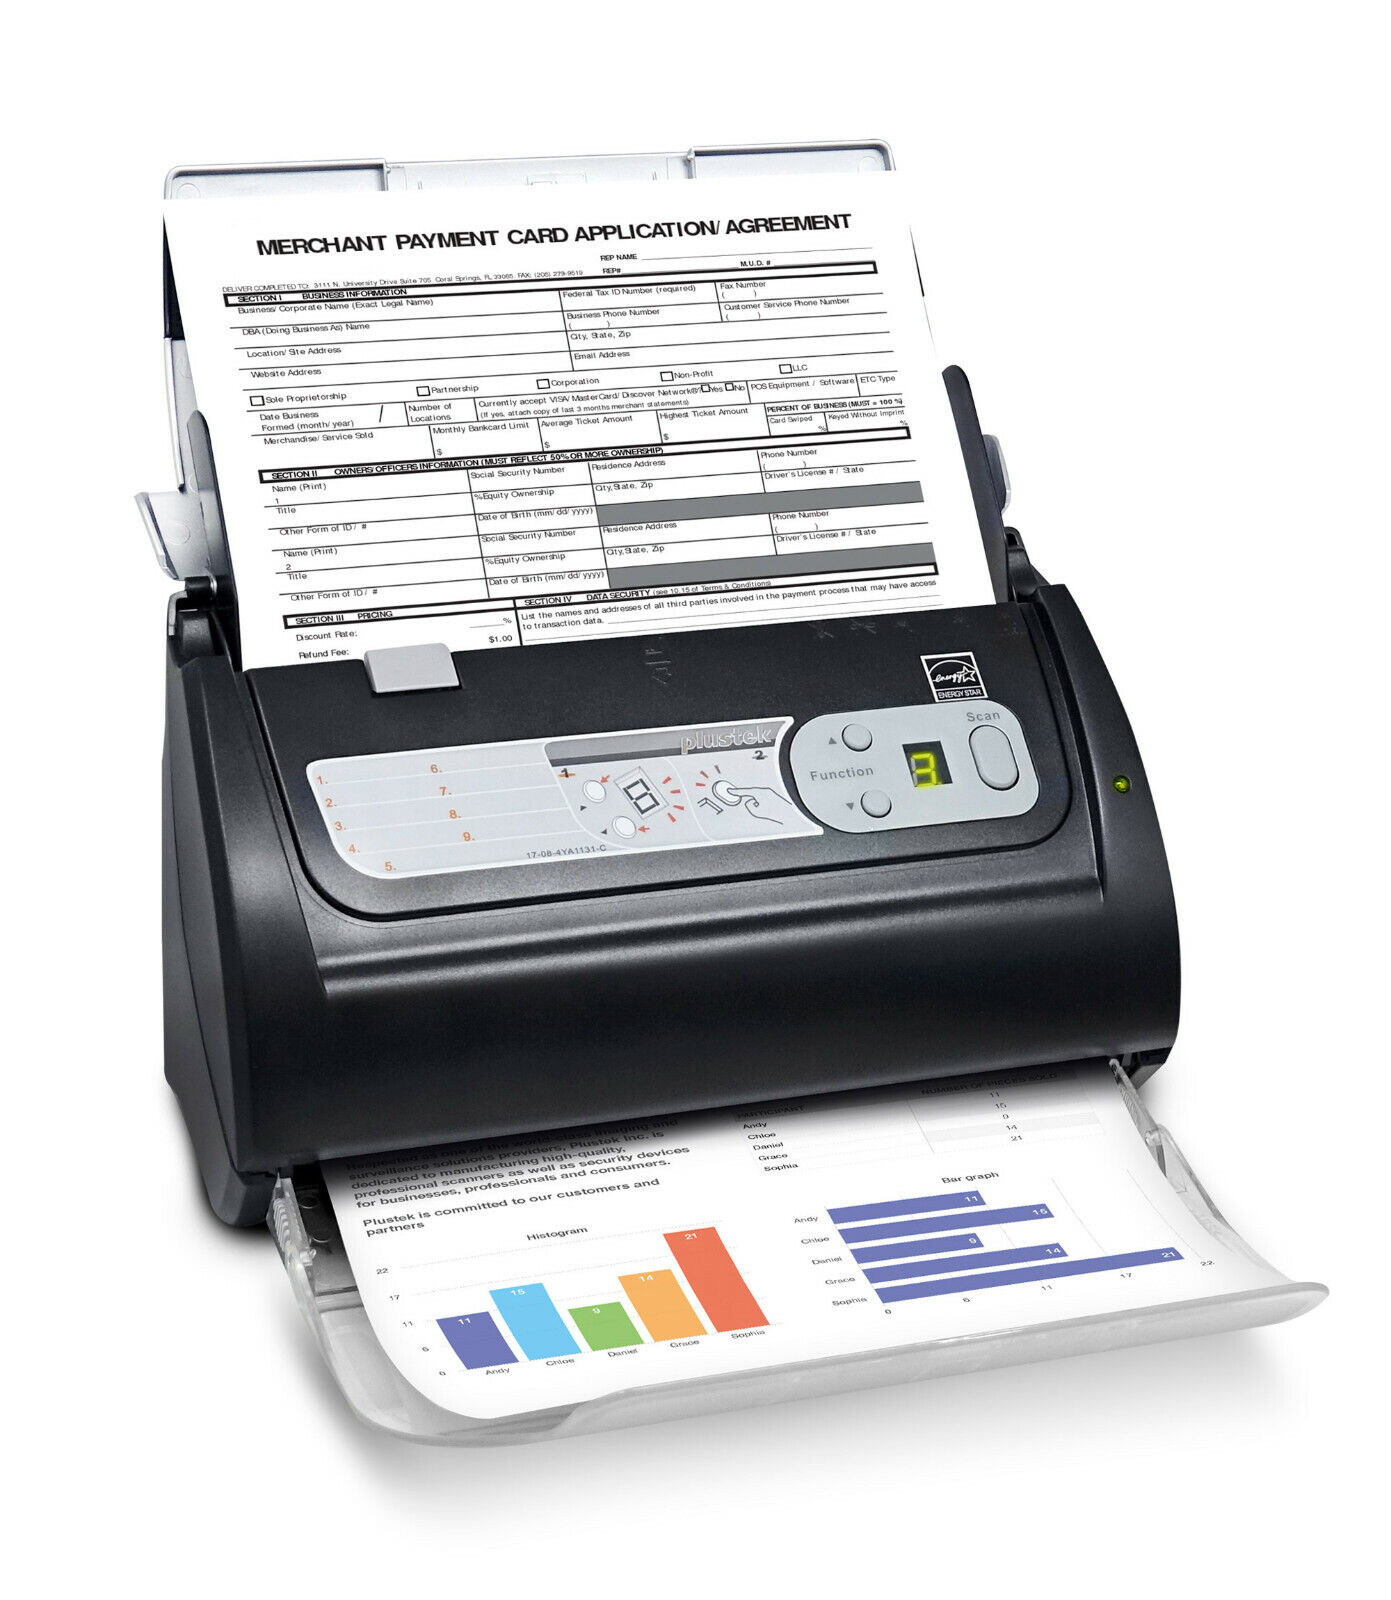 Plustek Office Document Scanner PS186 - Color Duplex Scanning with OCR function